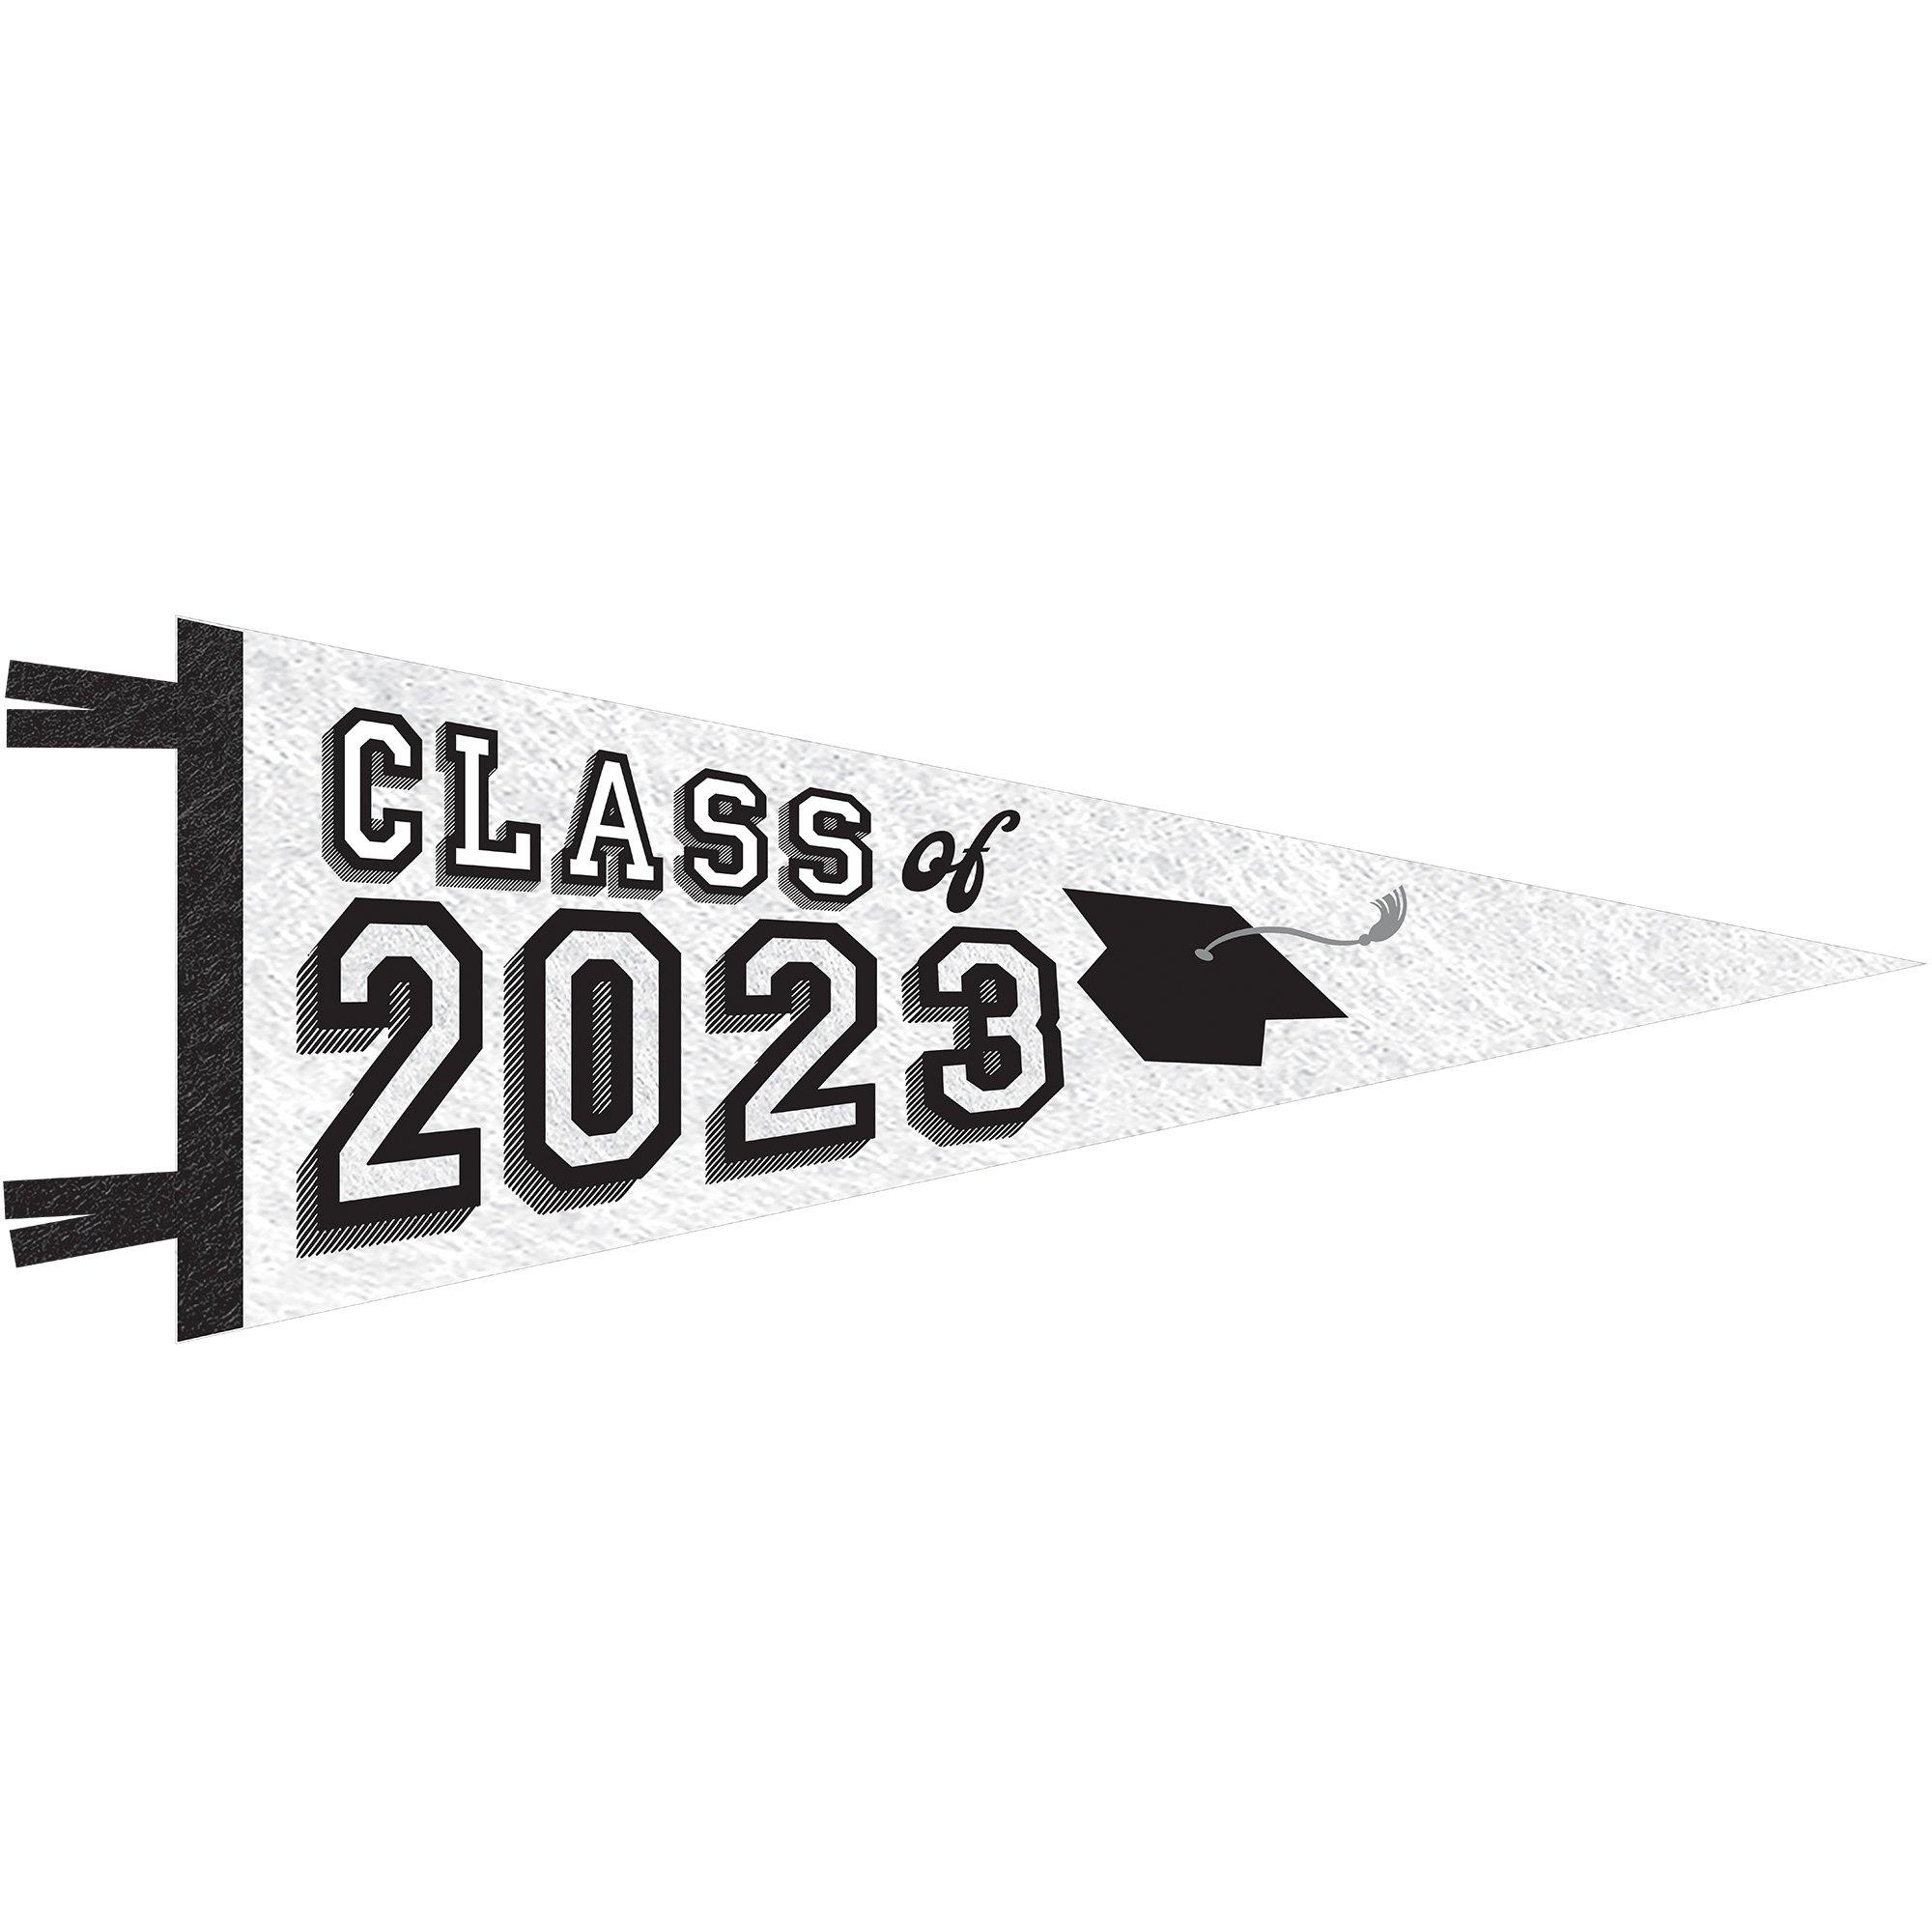 Class of 2023 Graduation Felt Pennant Flag, 30in x 11.4in